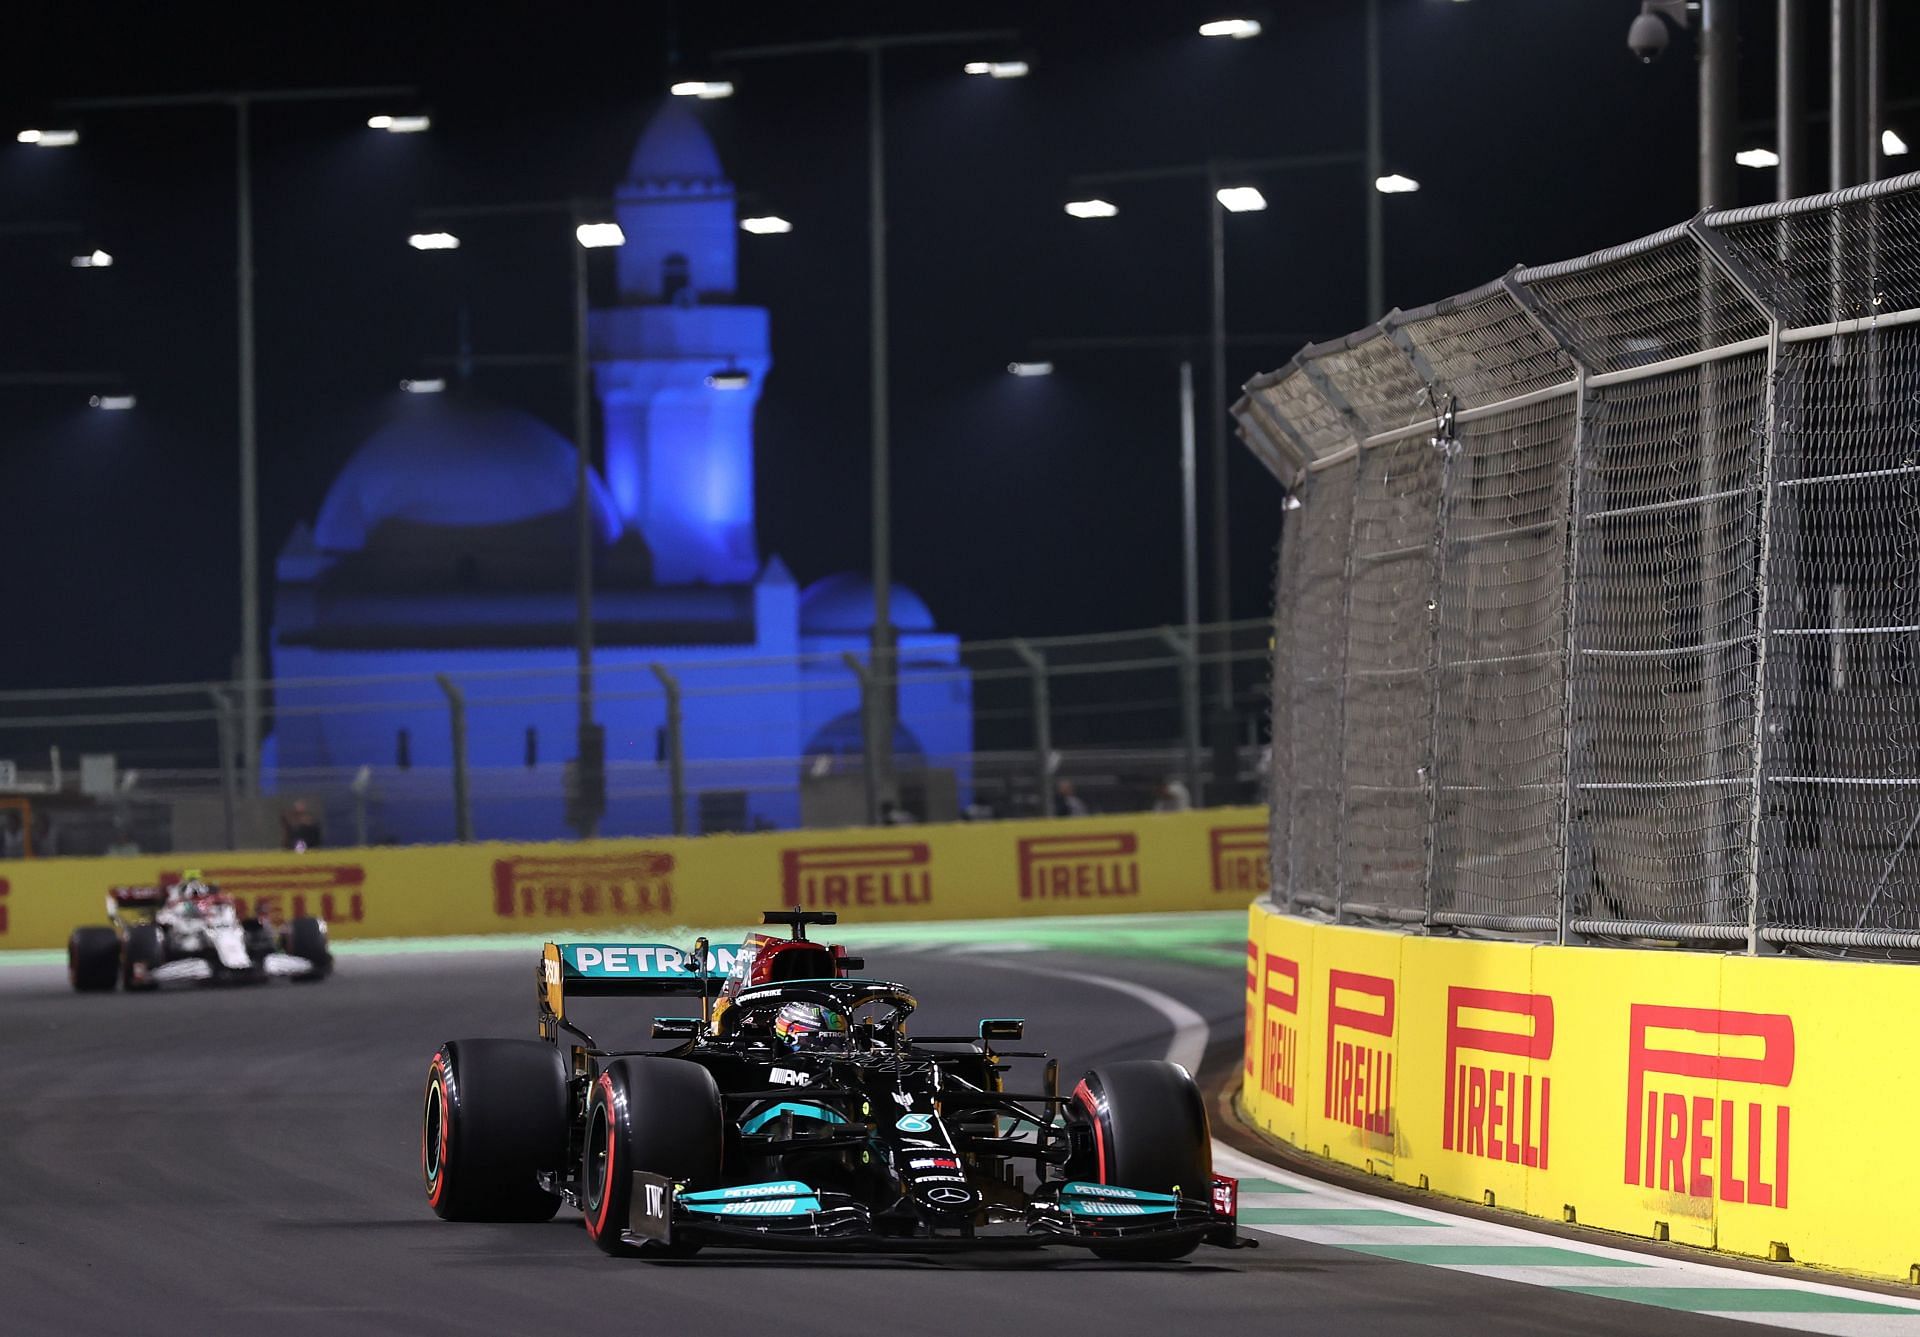 F1 Grand Prix of Saudi Arabia - Qualifying